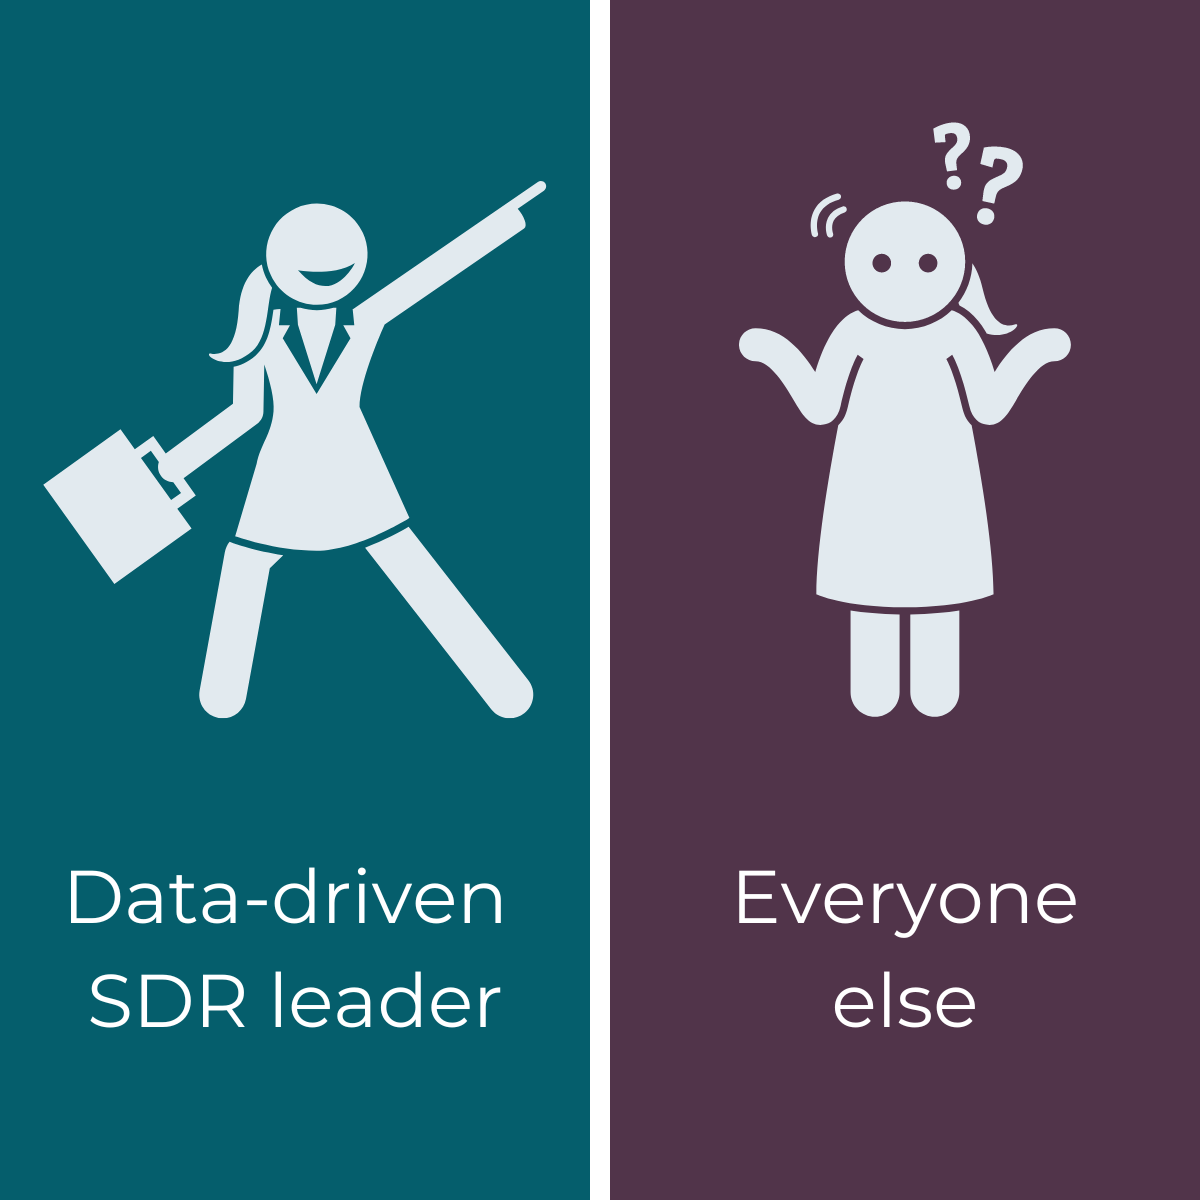 Data-driven SDR leader